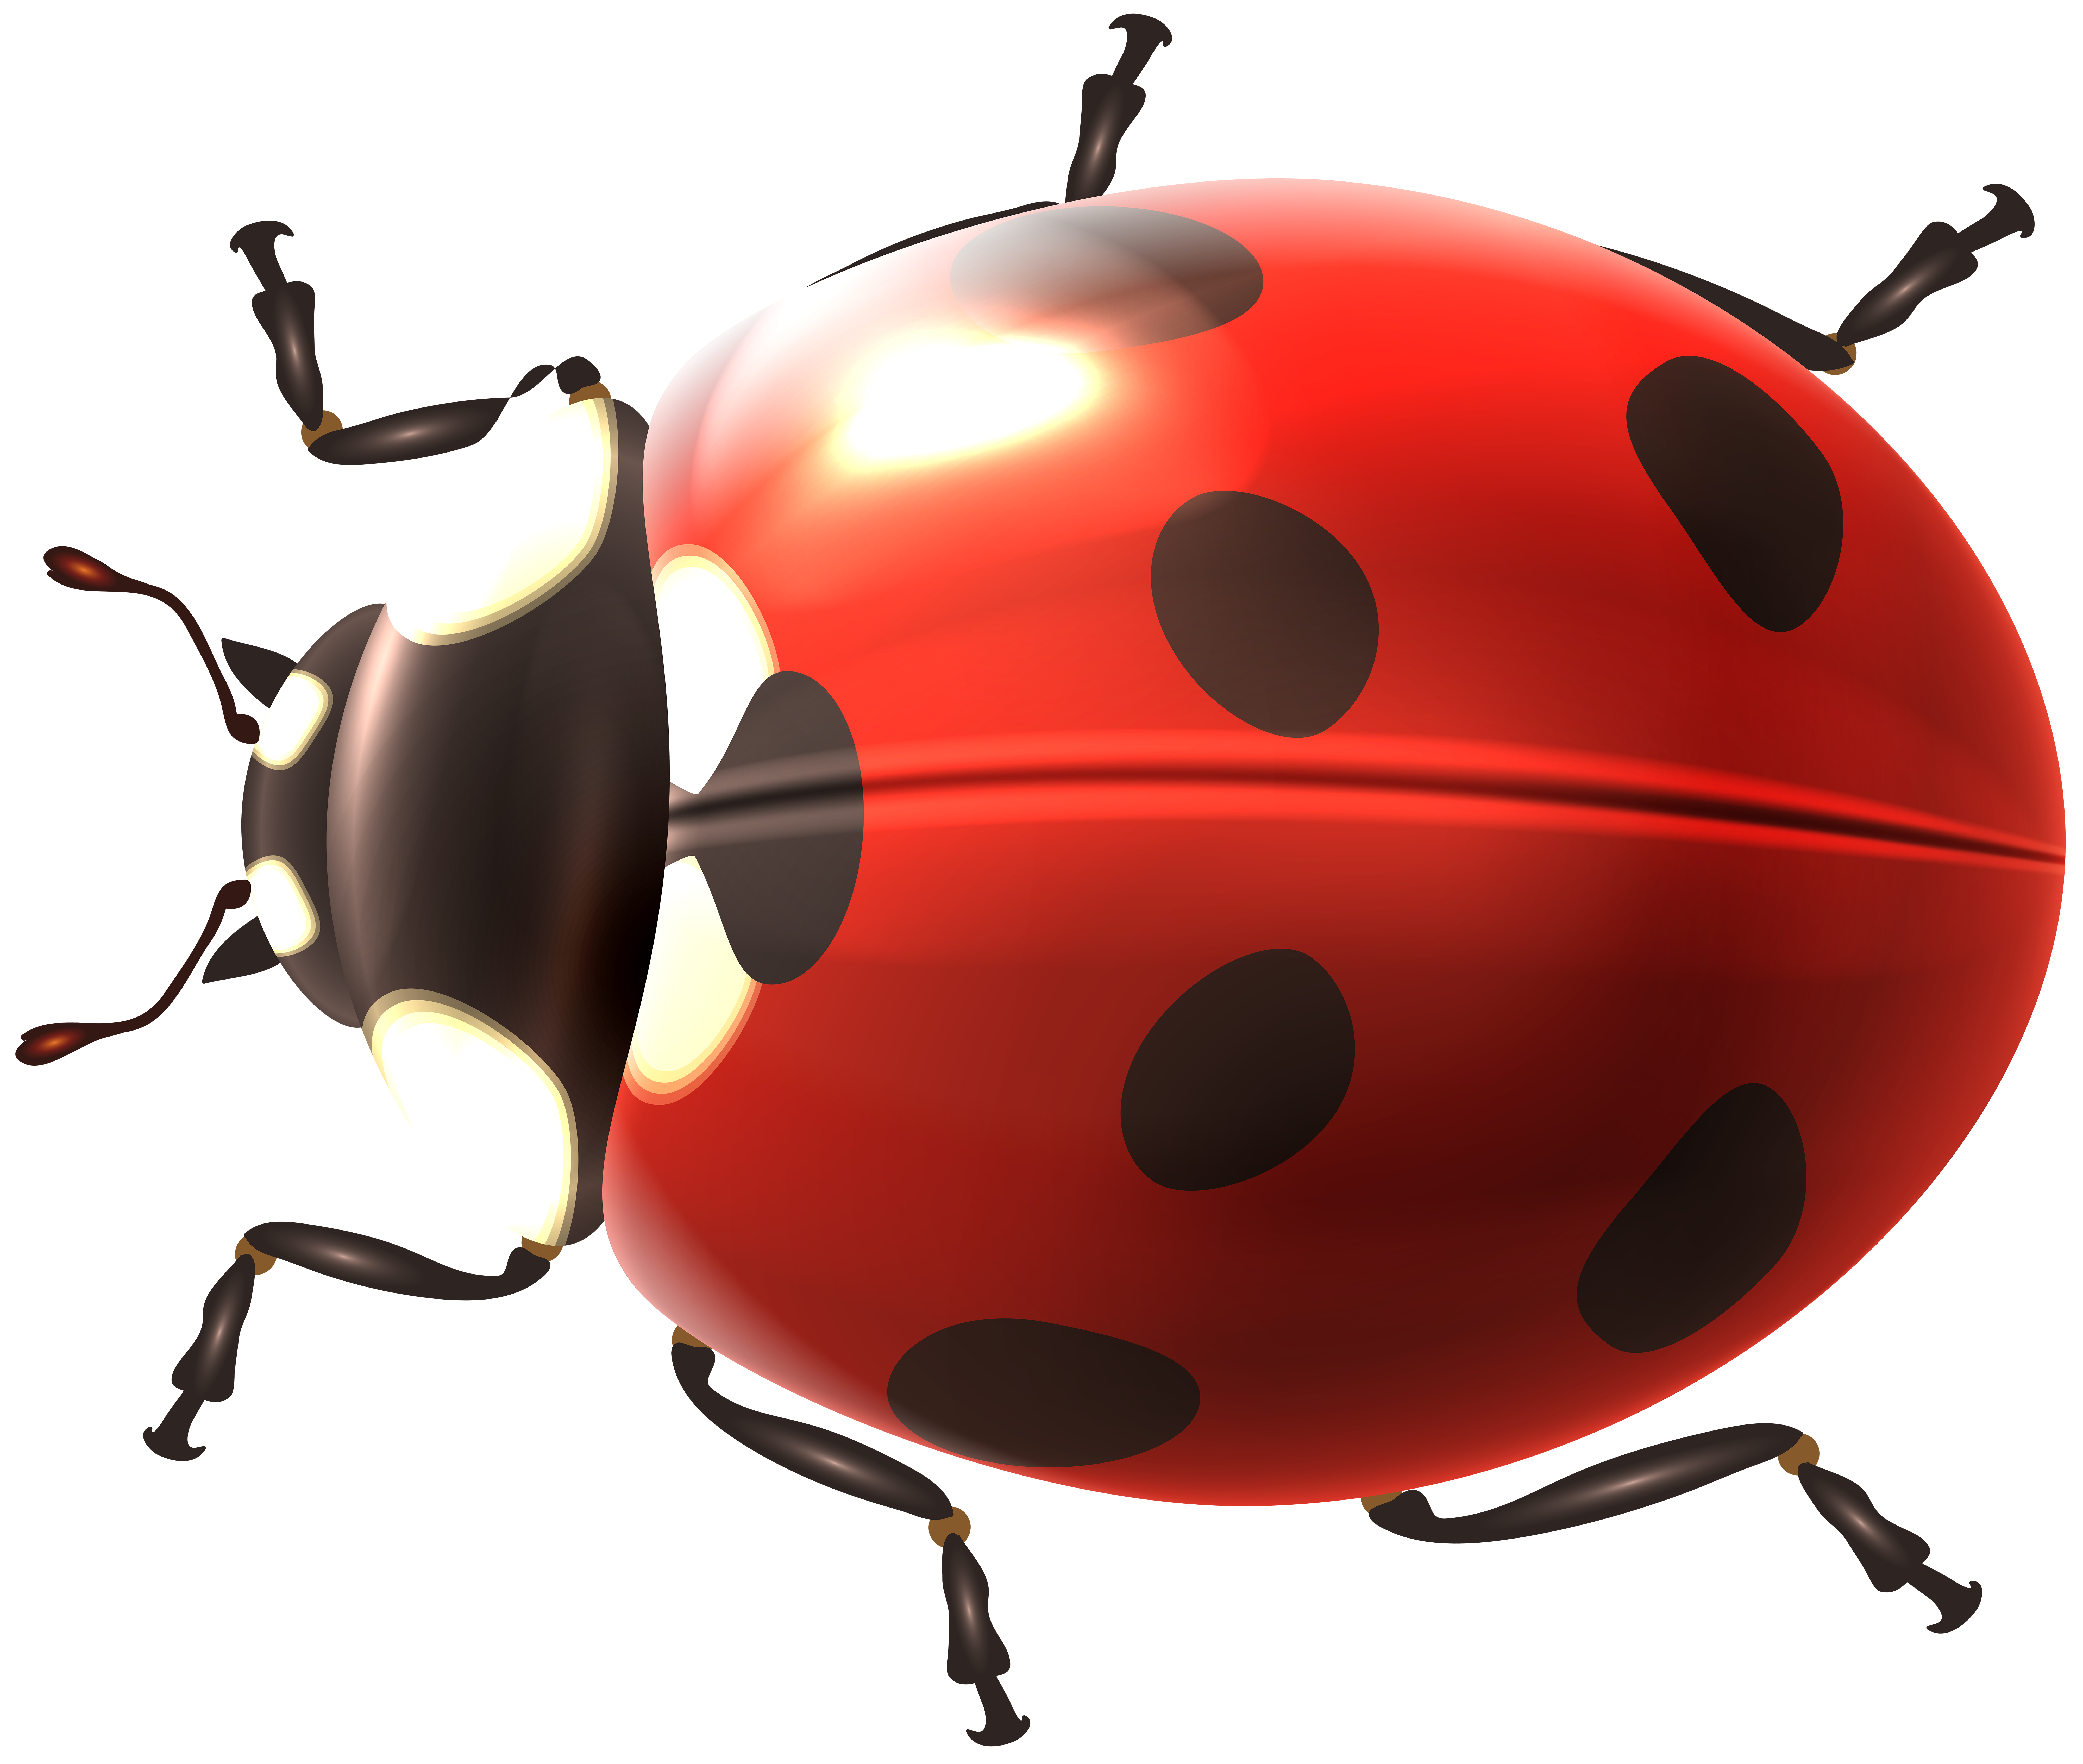 Ladybug PNG File - PNG All